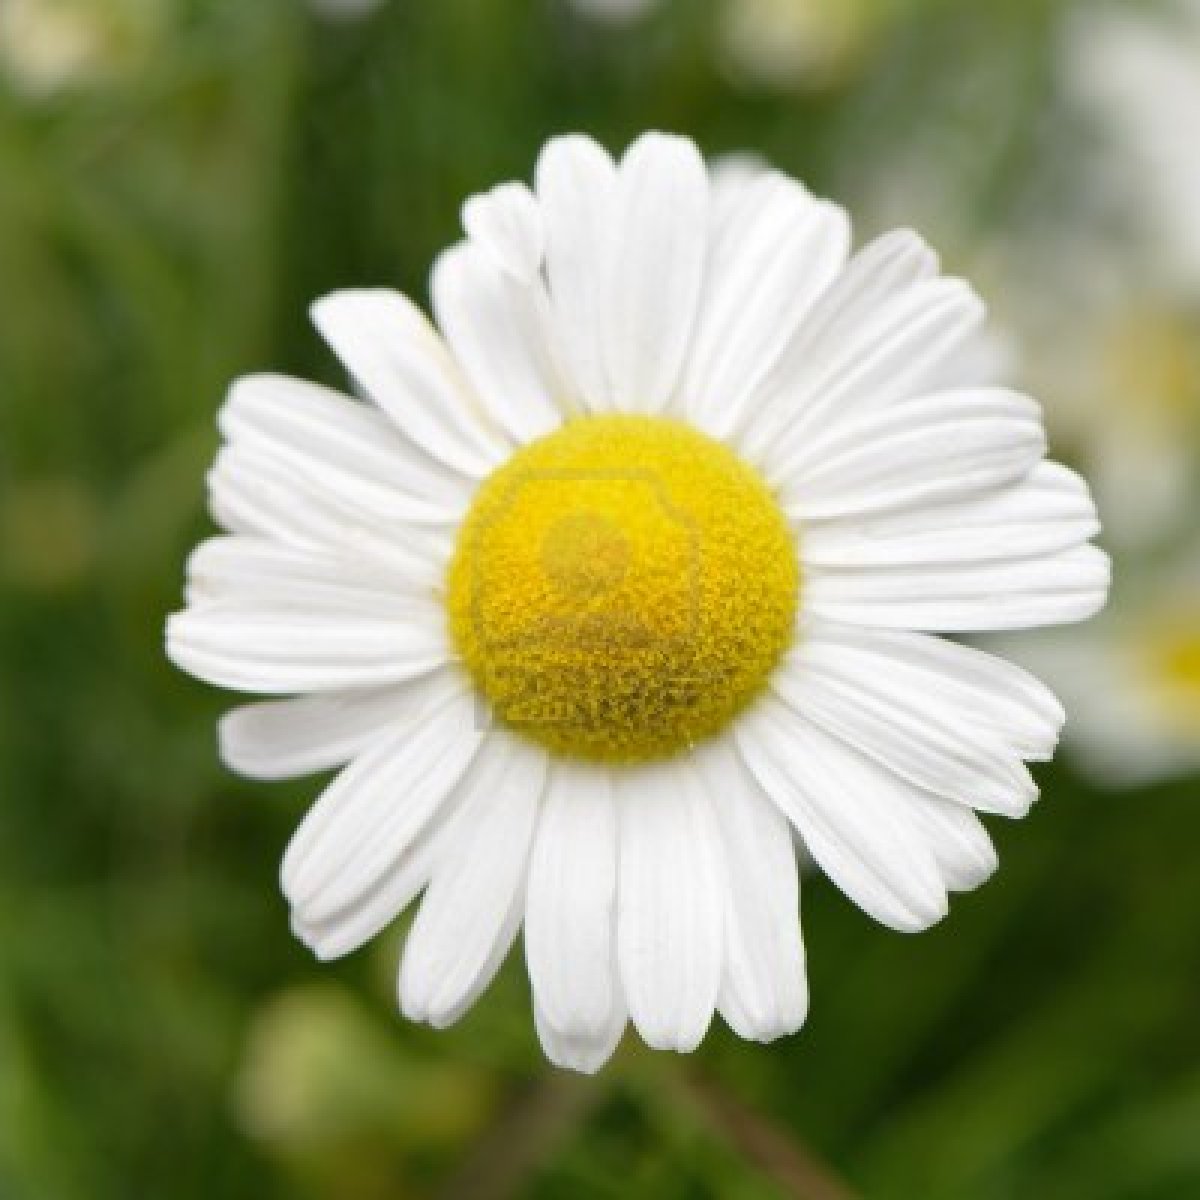 http://4.bp.blogspot.com/-yo0OHe8PVBg/UJ6RS2XTqYI/AAAAAAAABe0/7GwEfiYFBOs/s1600/14408368-wild-chamomile-white-flowers-selective-focus-bokeh.jpg